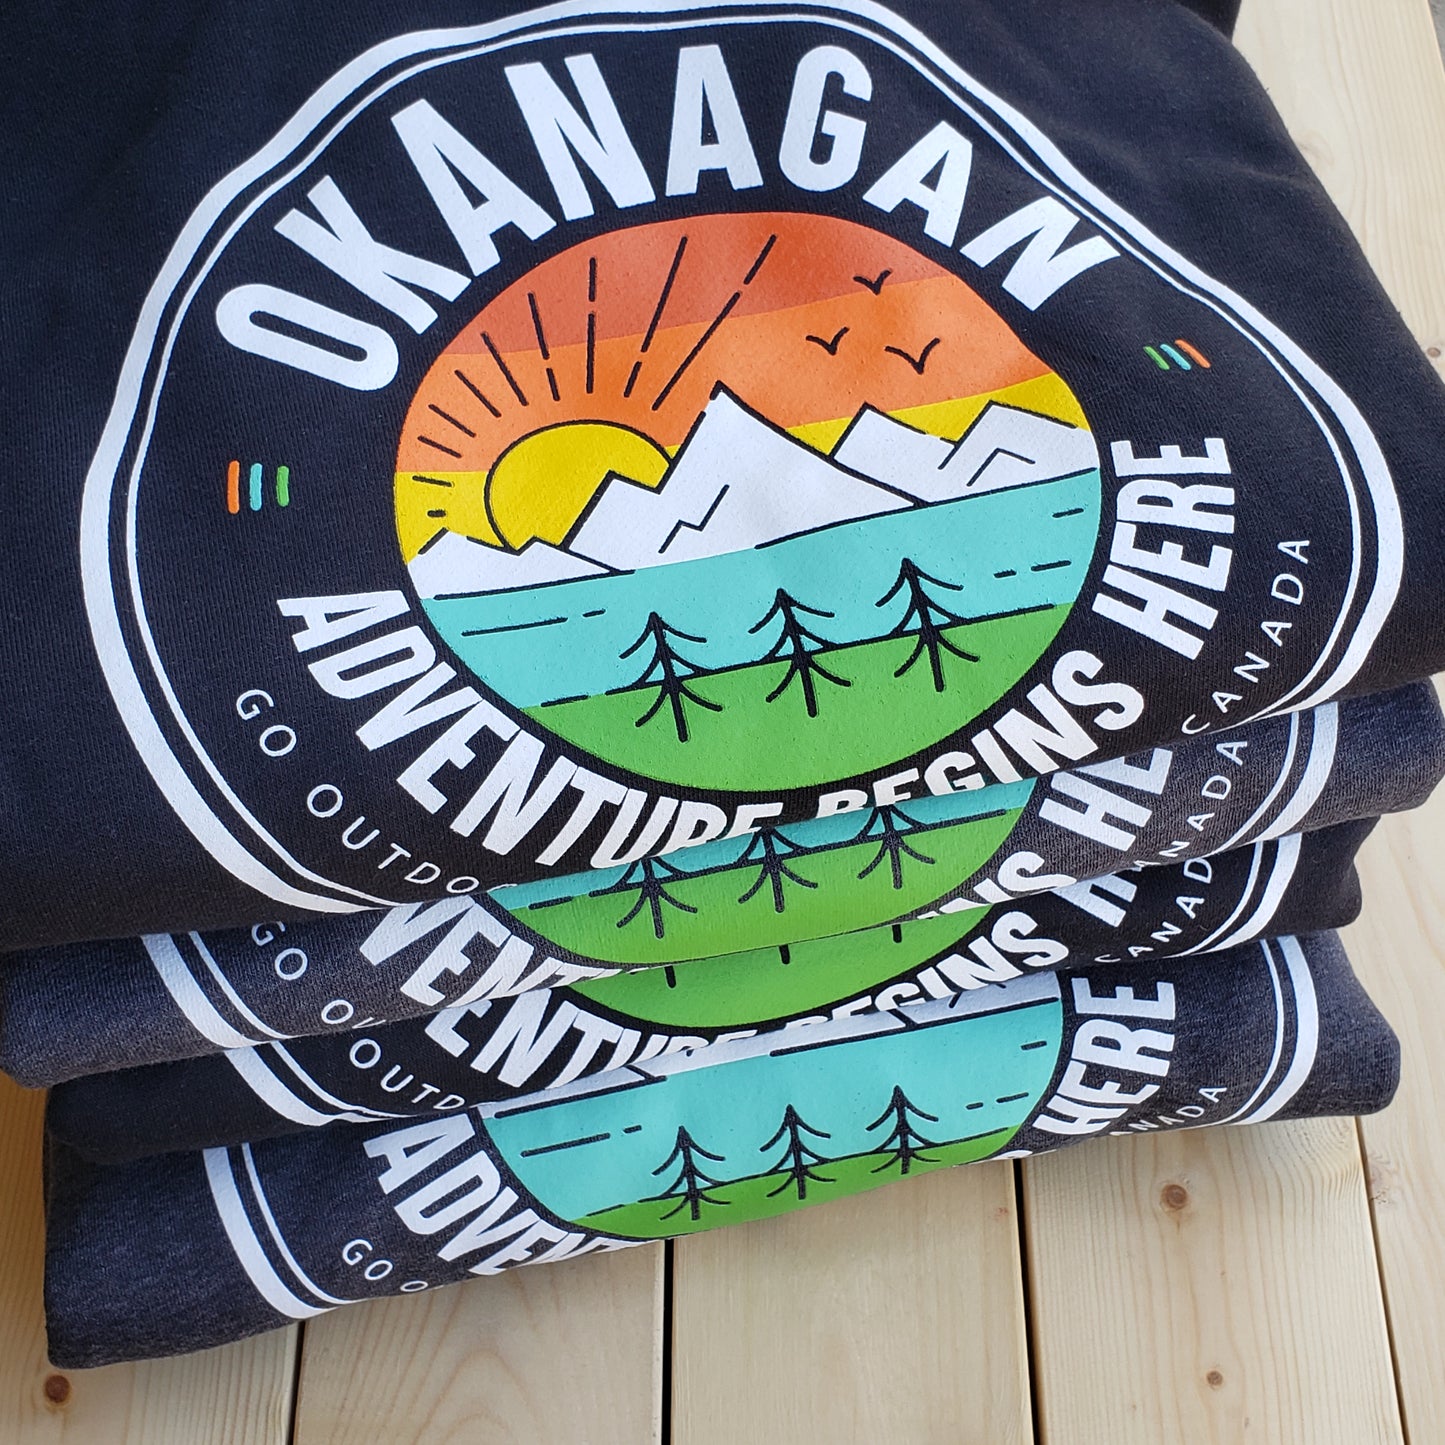 Apparel - Clothing - Hoodie - Sweatshirt Okanagan Adventure 